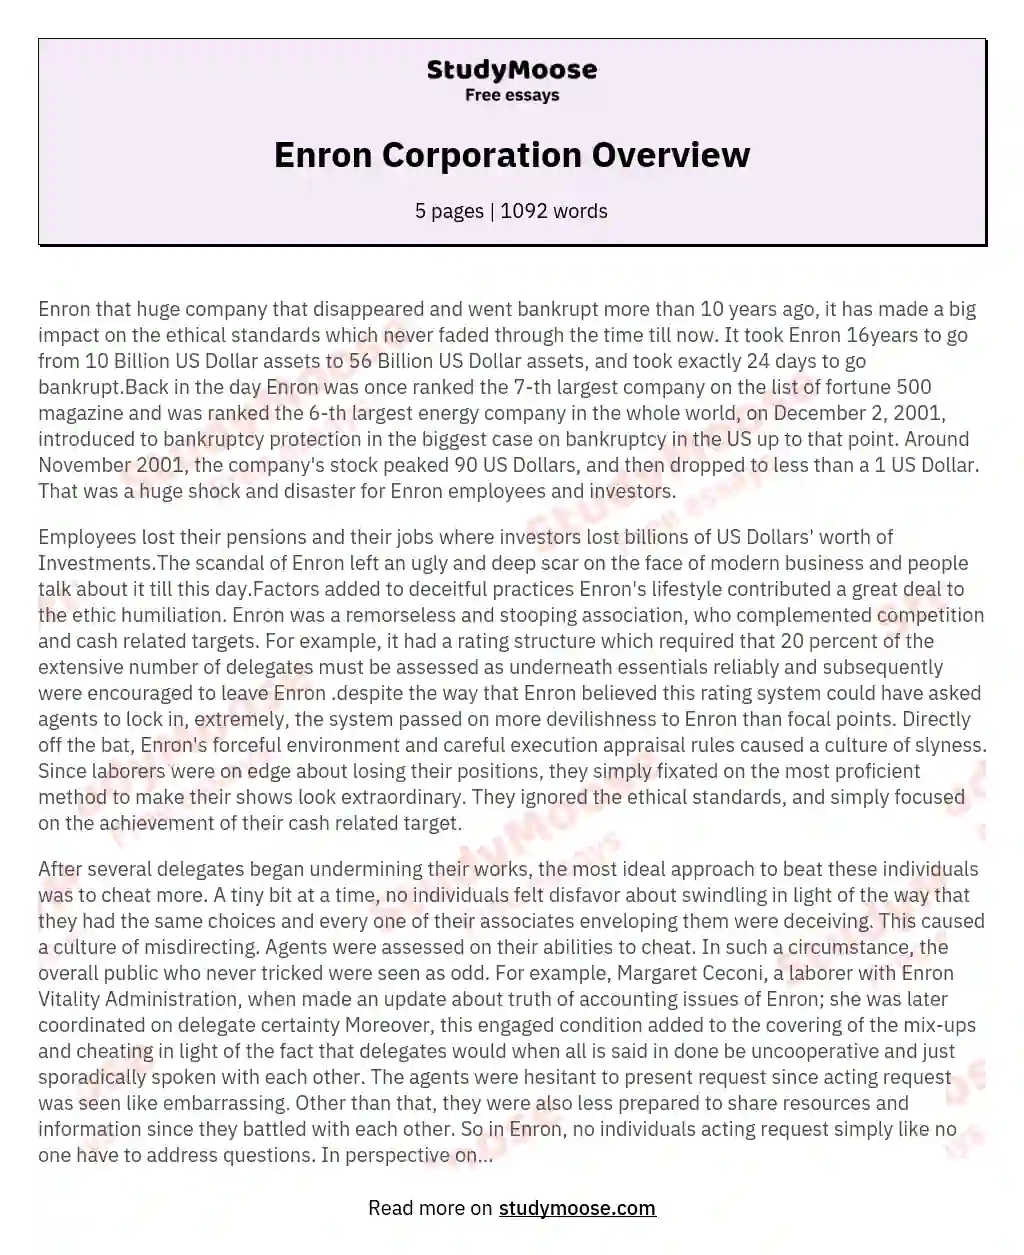 Enron Corporation Overview essay